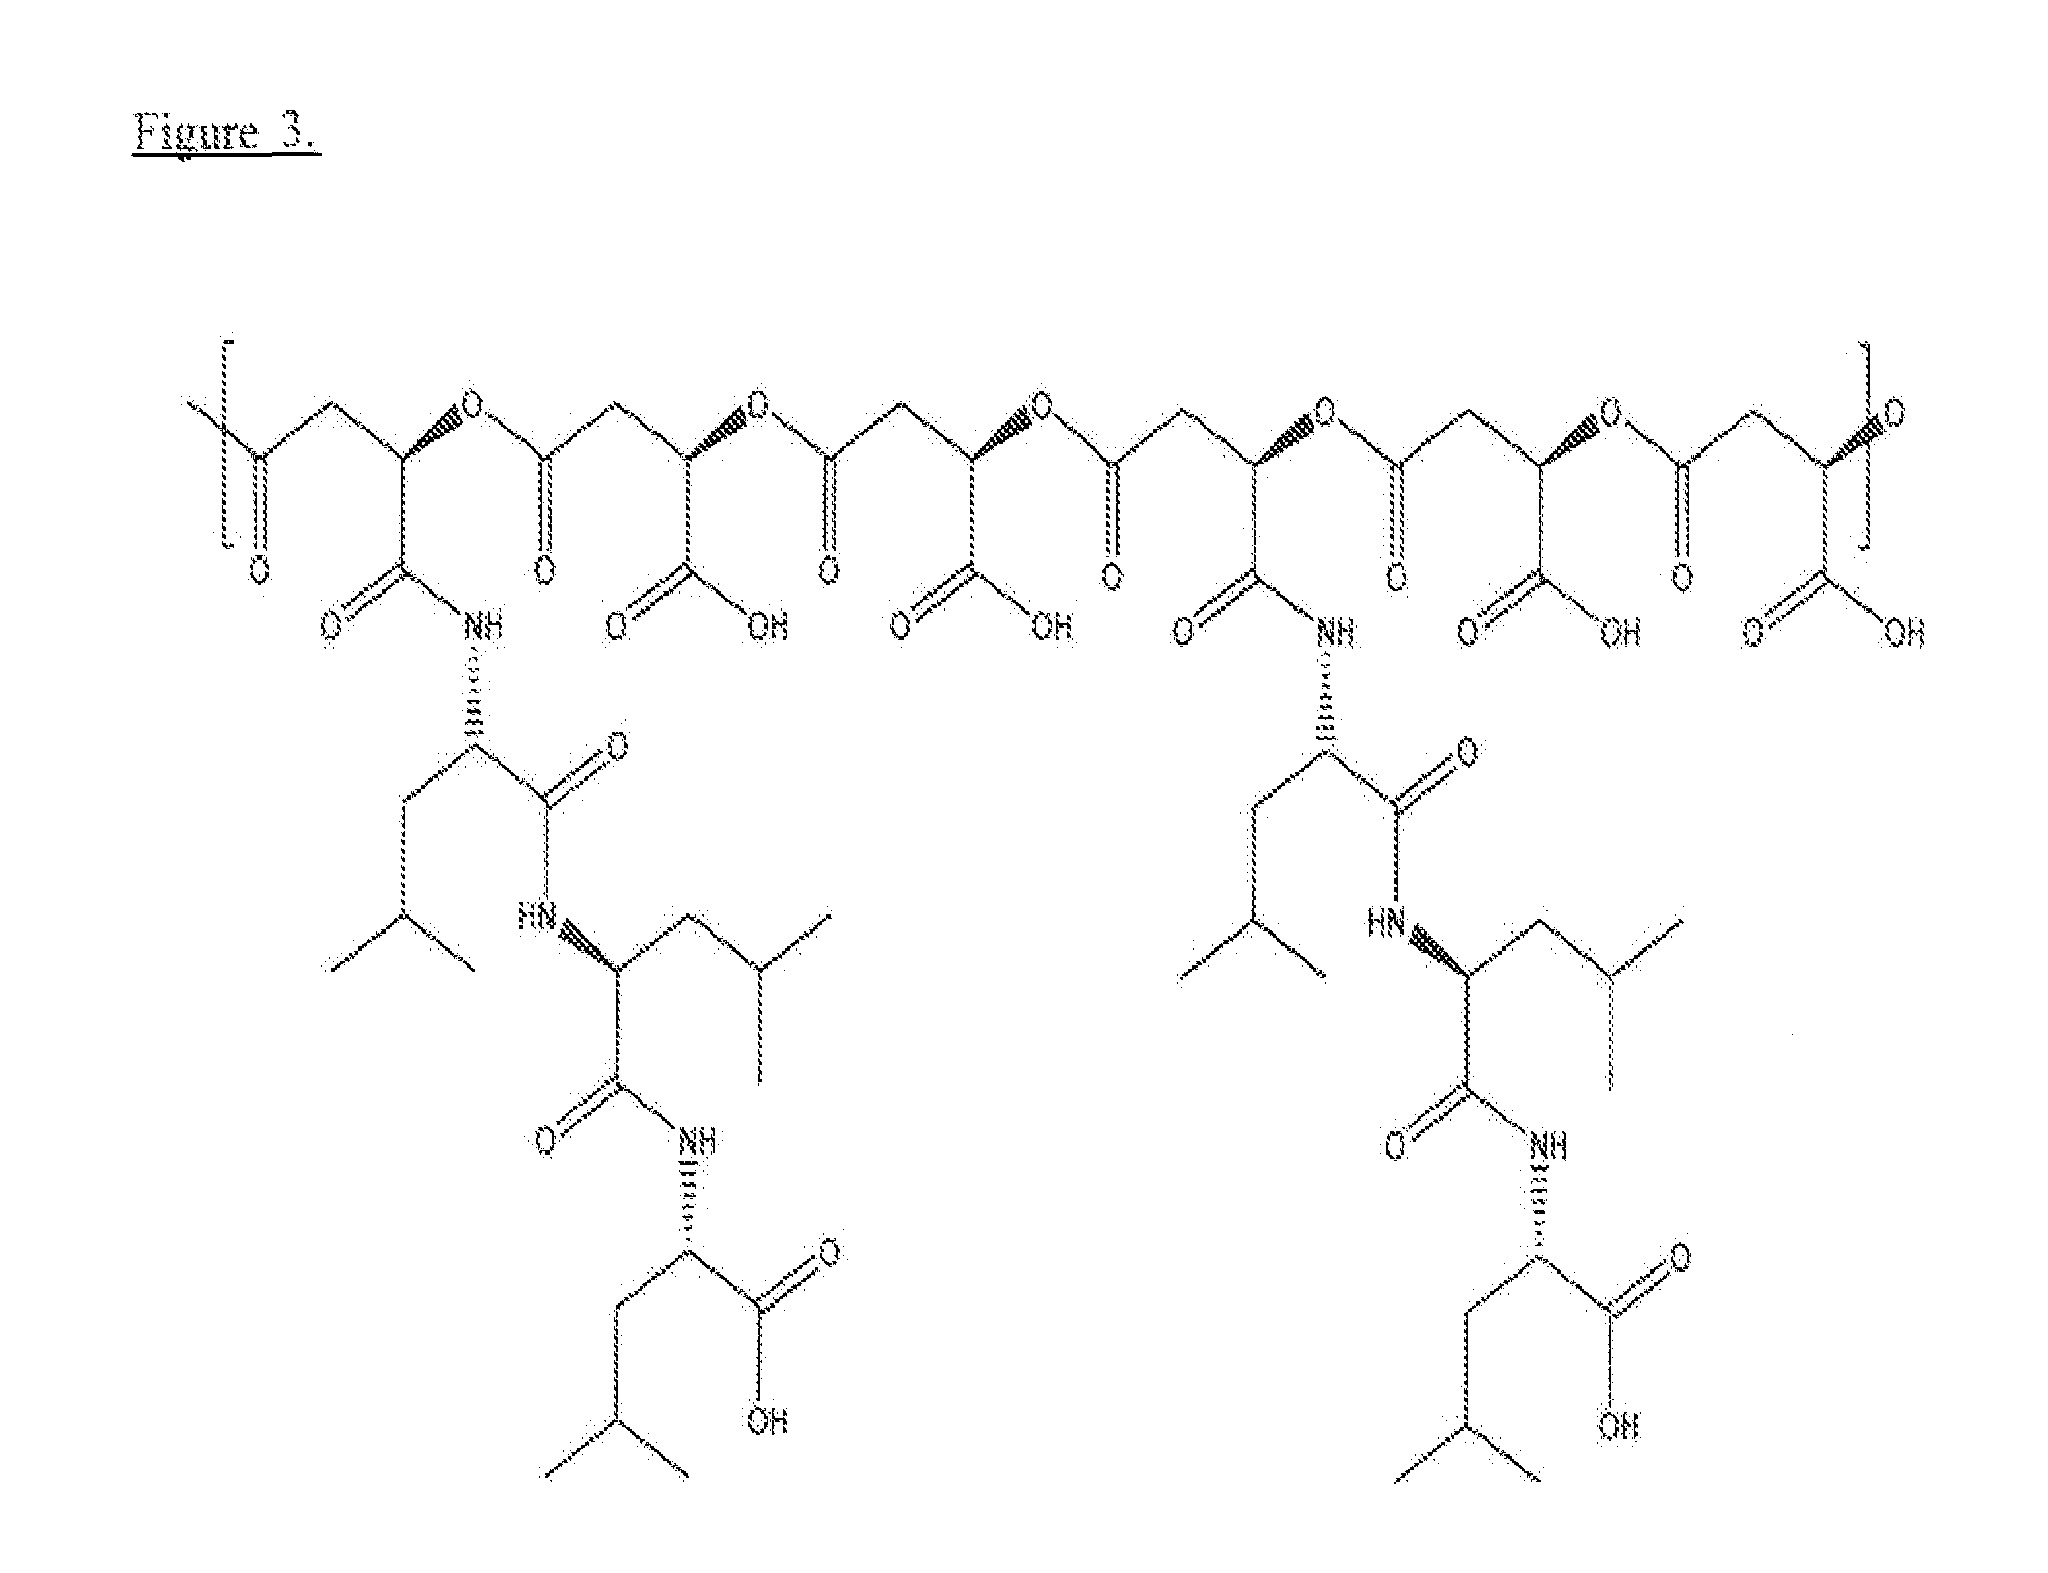 Poly(beta malic acid) with pendant leu-leu-leu tripeptide for effective cytoplasmic drug delivery